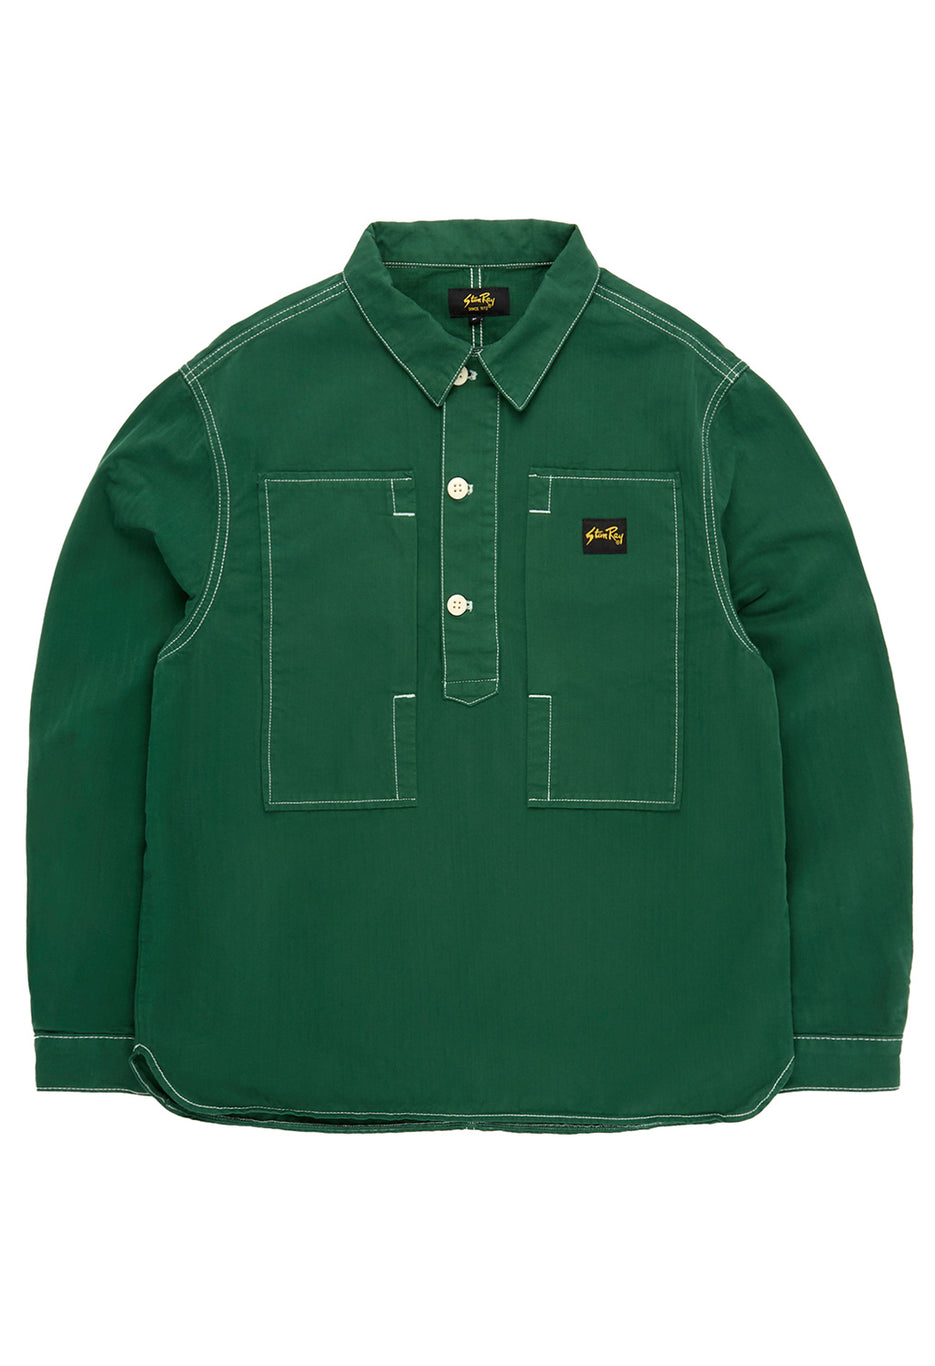 Stan Ray Men's Painters Shirt - Racing Green HBT